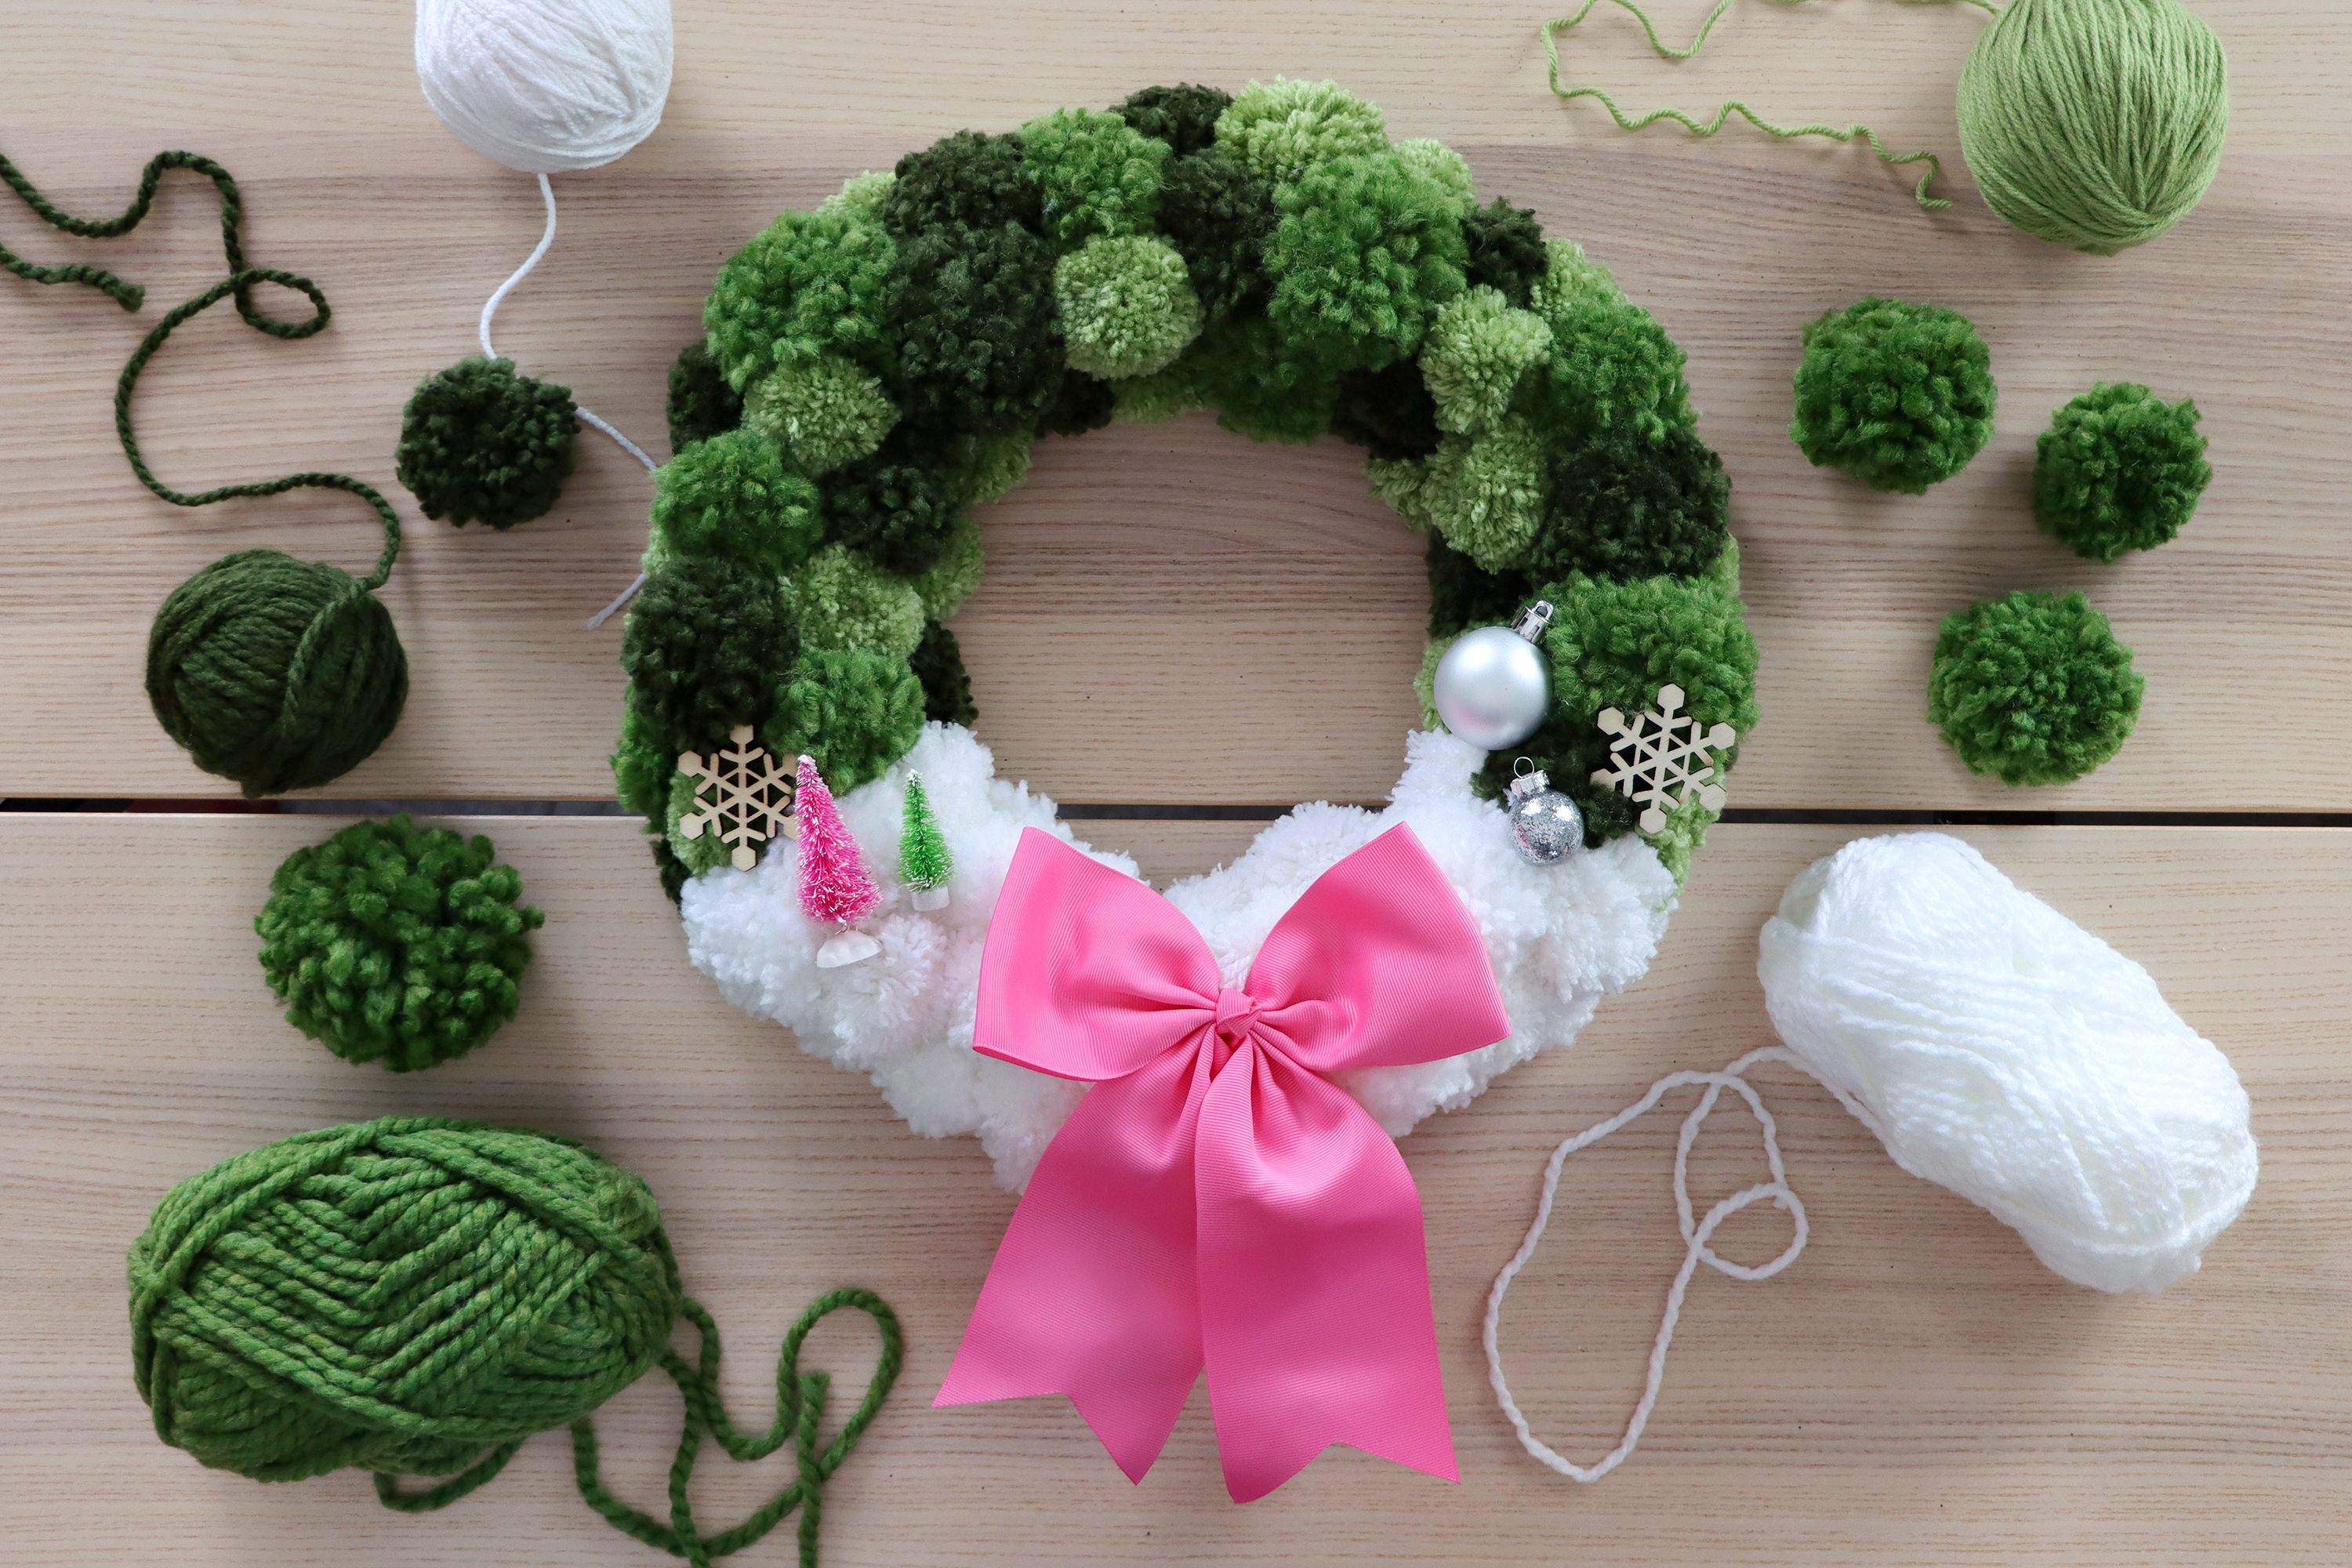 pom pom wreath holiday decor | christmas wreath Boho wreath